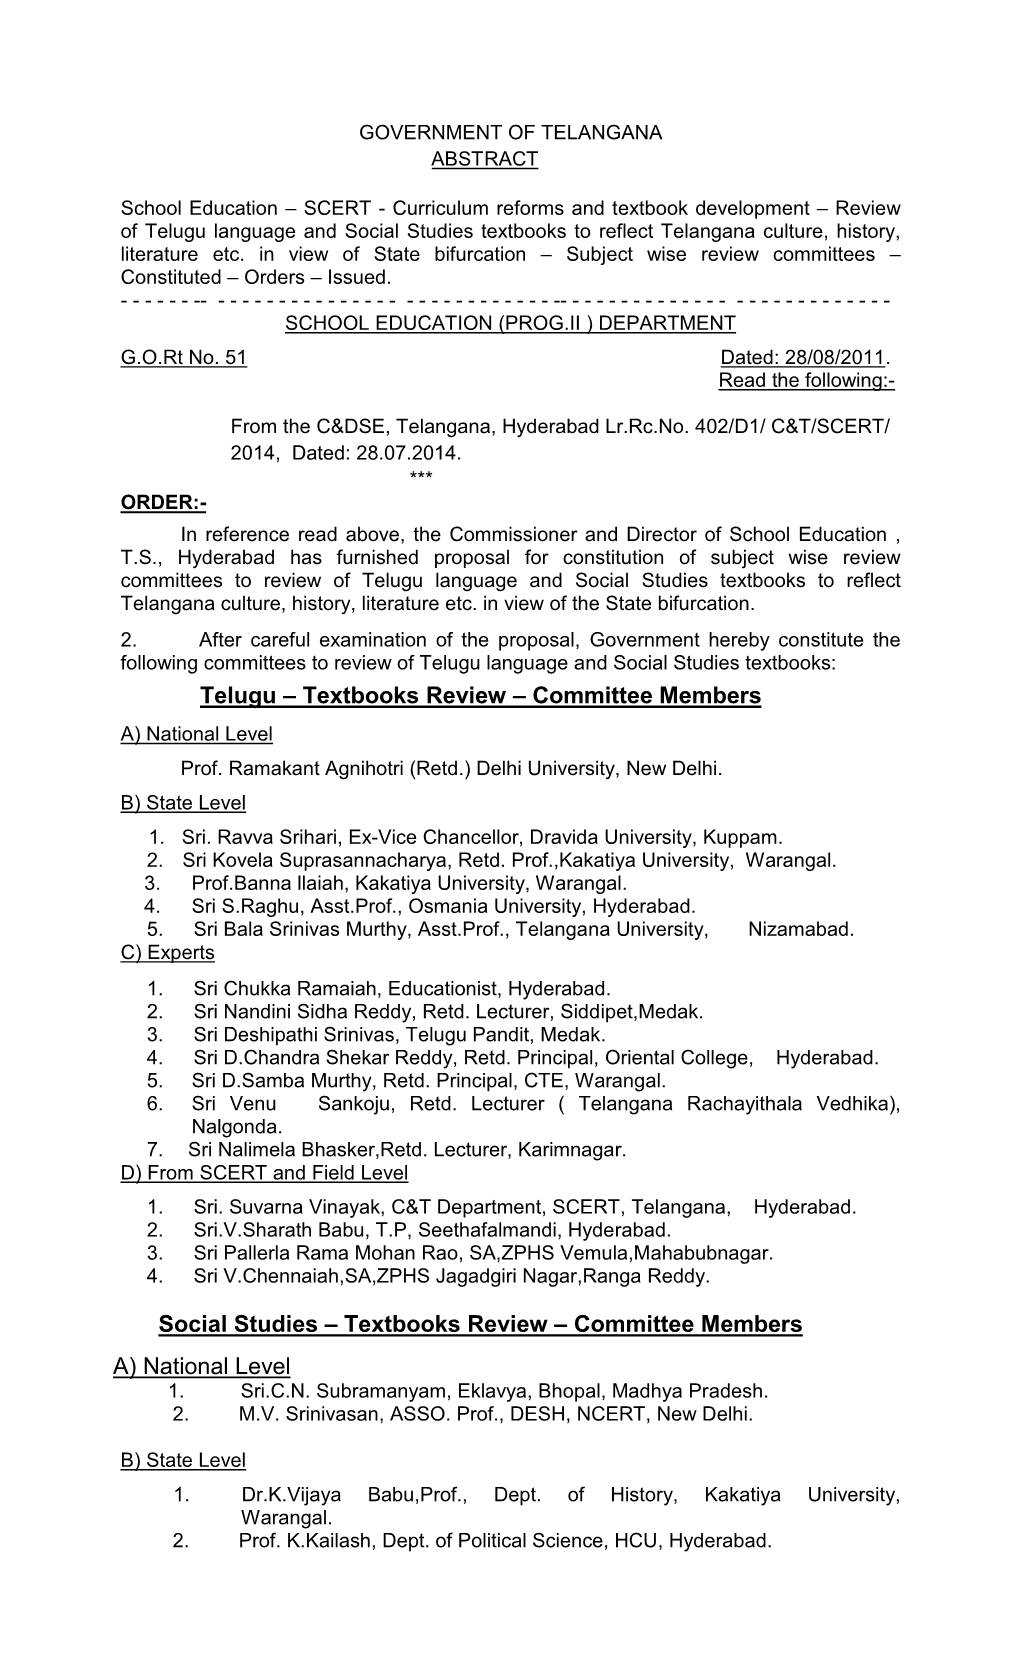 Telugu – Textbooks Review – Committee Members Social Studies